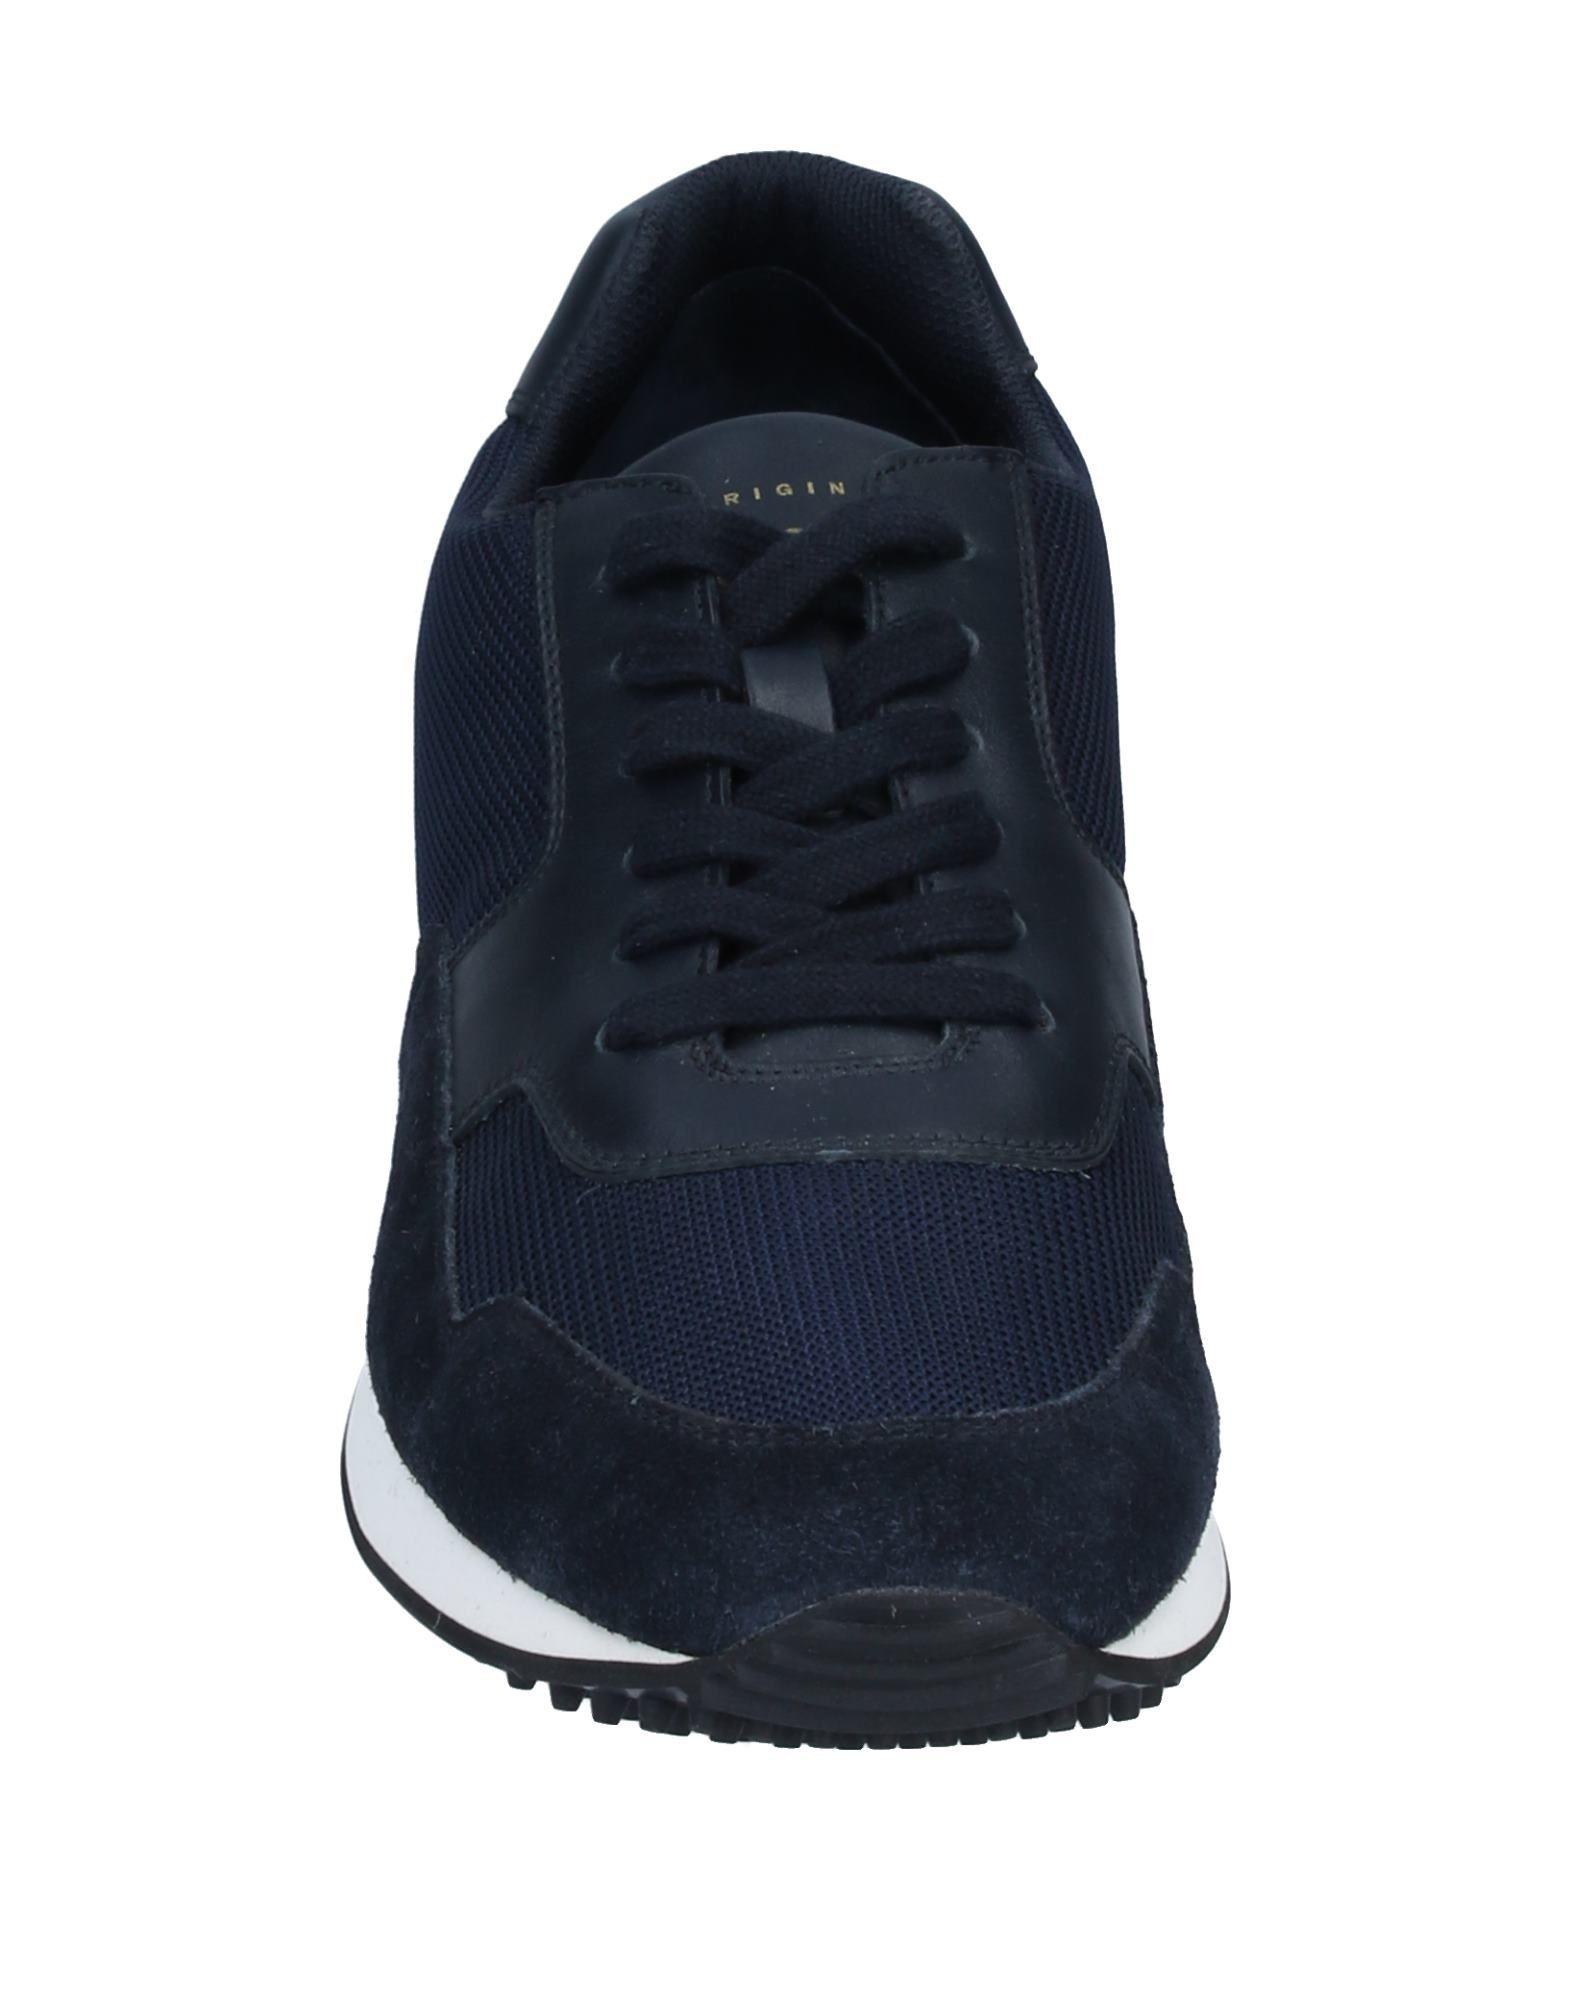 Car Shoe Leather Low-tops & Sneakers in Dark Blue (Blue) for Men - Lyst